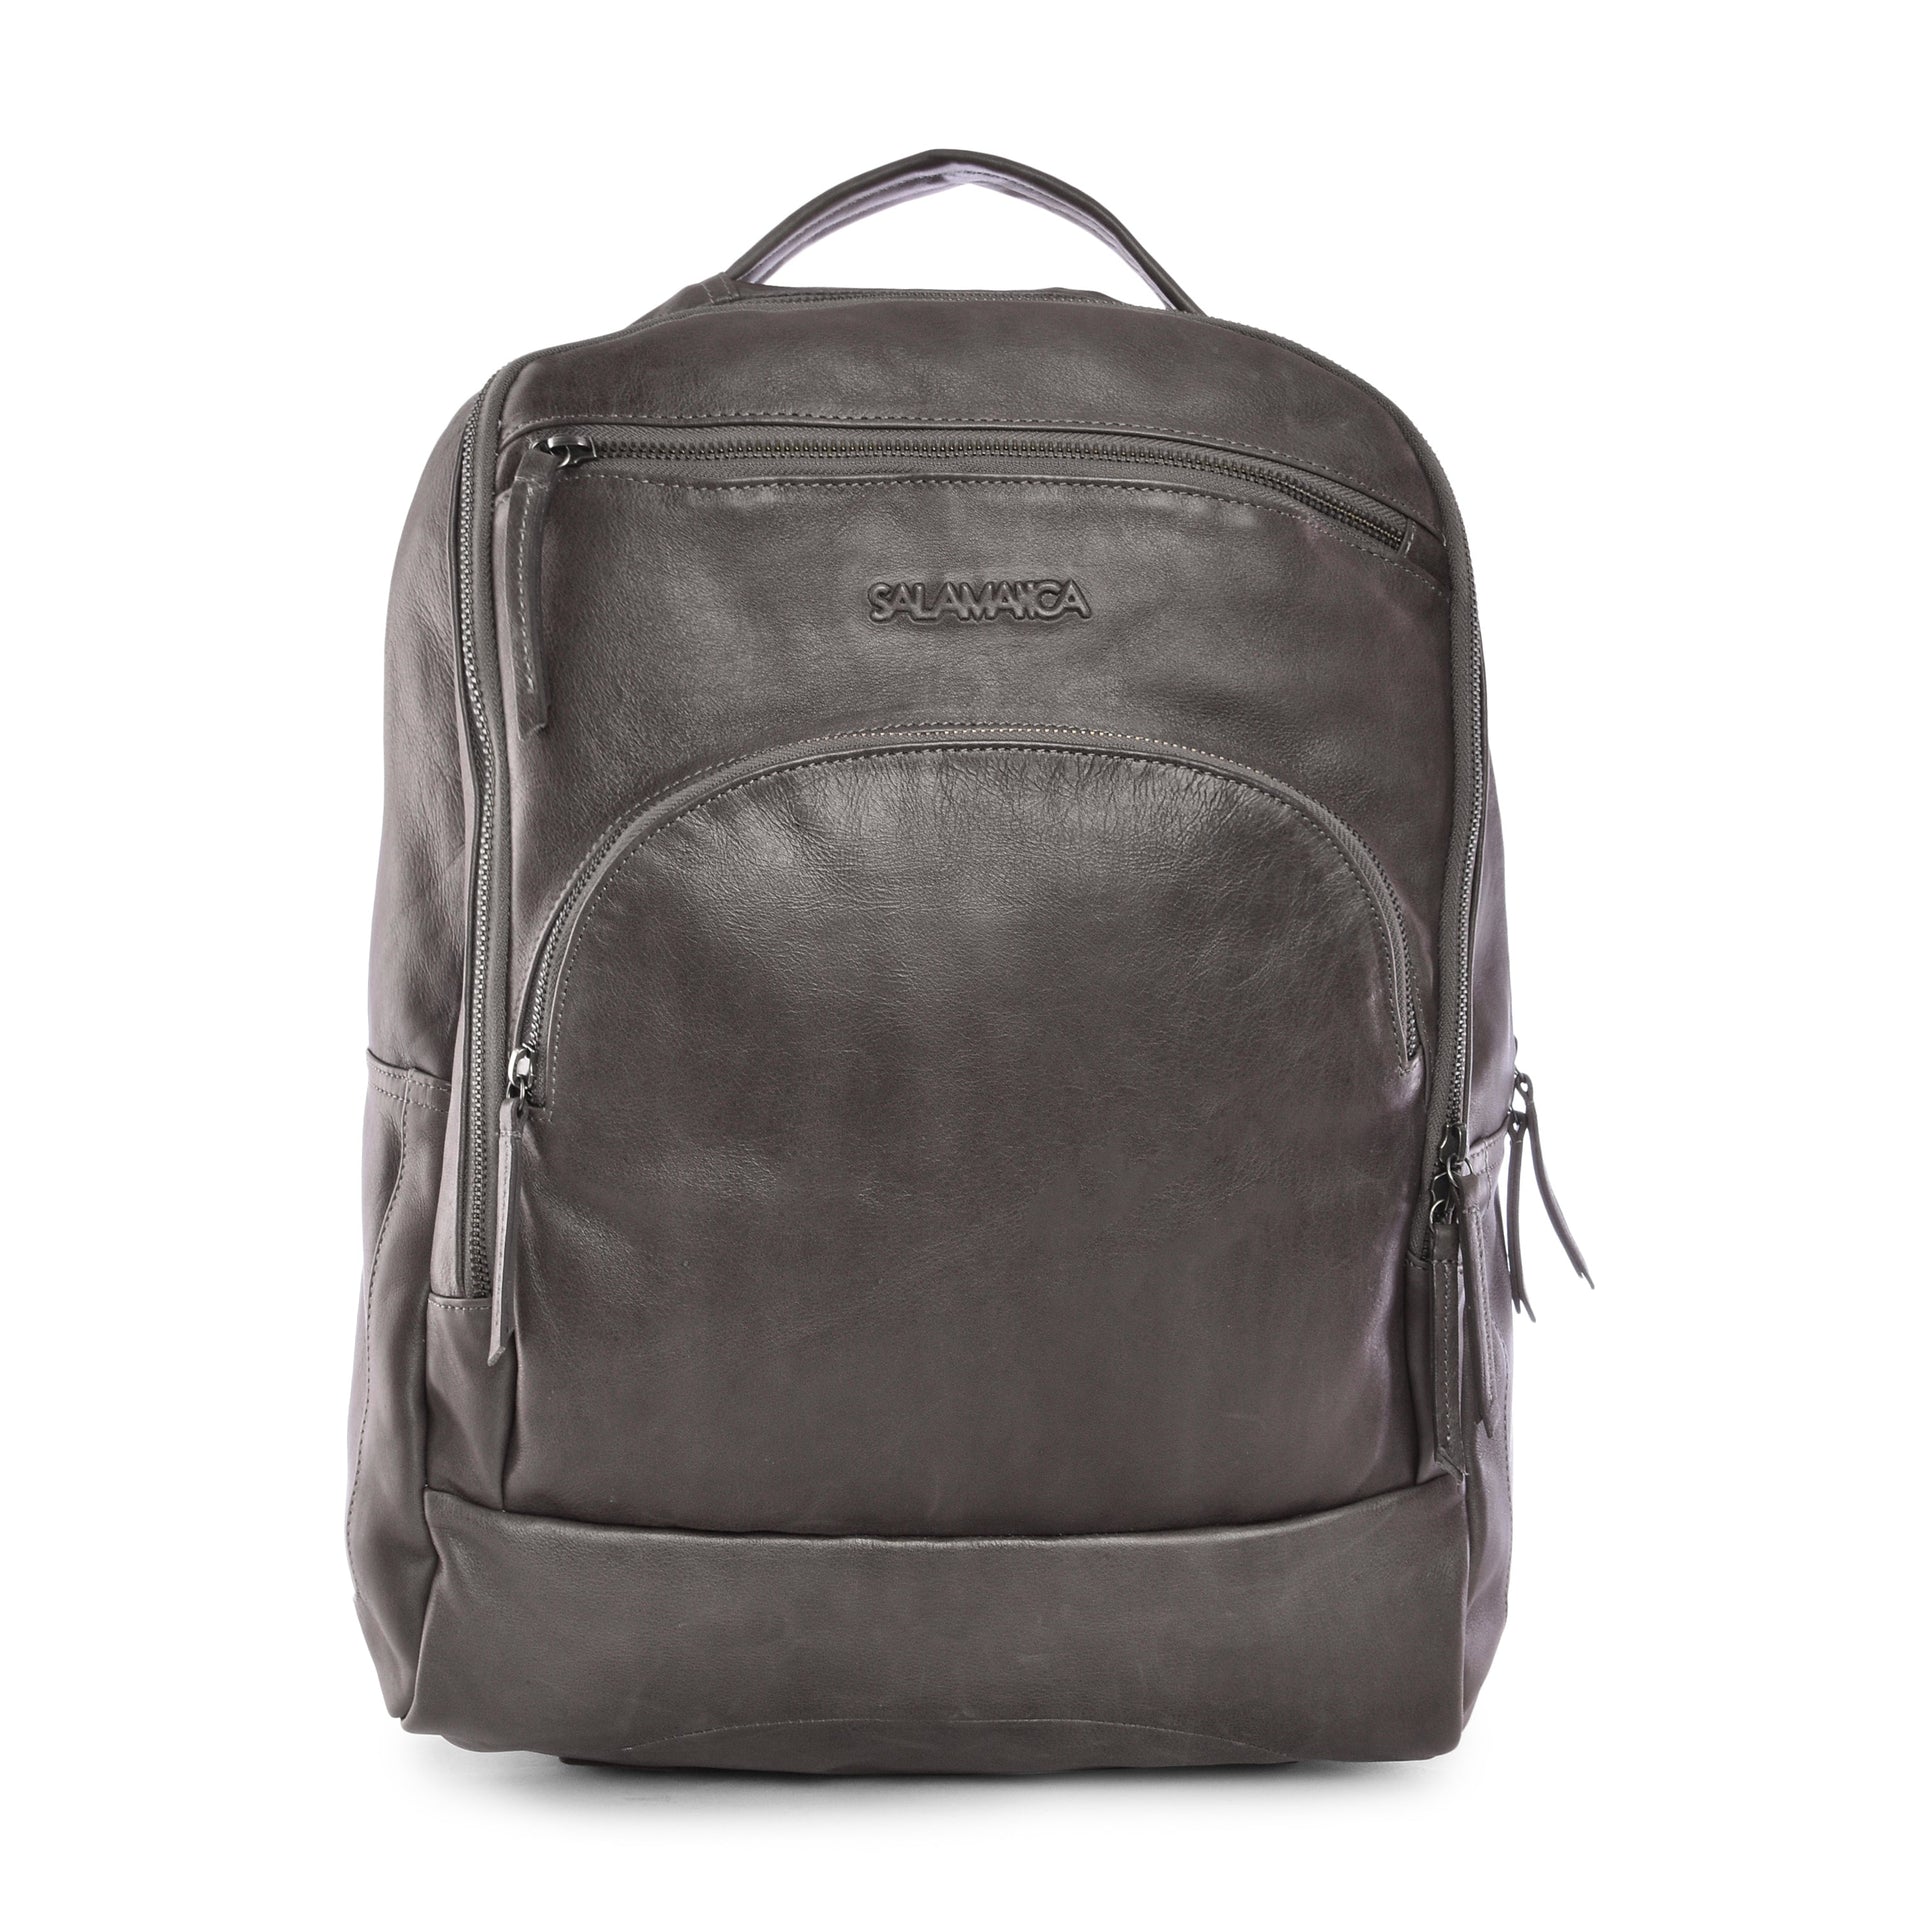 Steve Backpack - Elephant Grey - Backpack